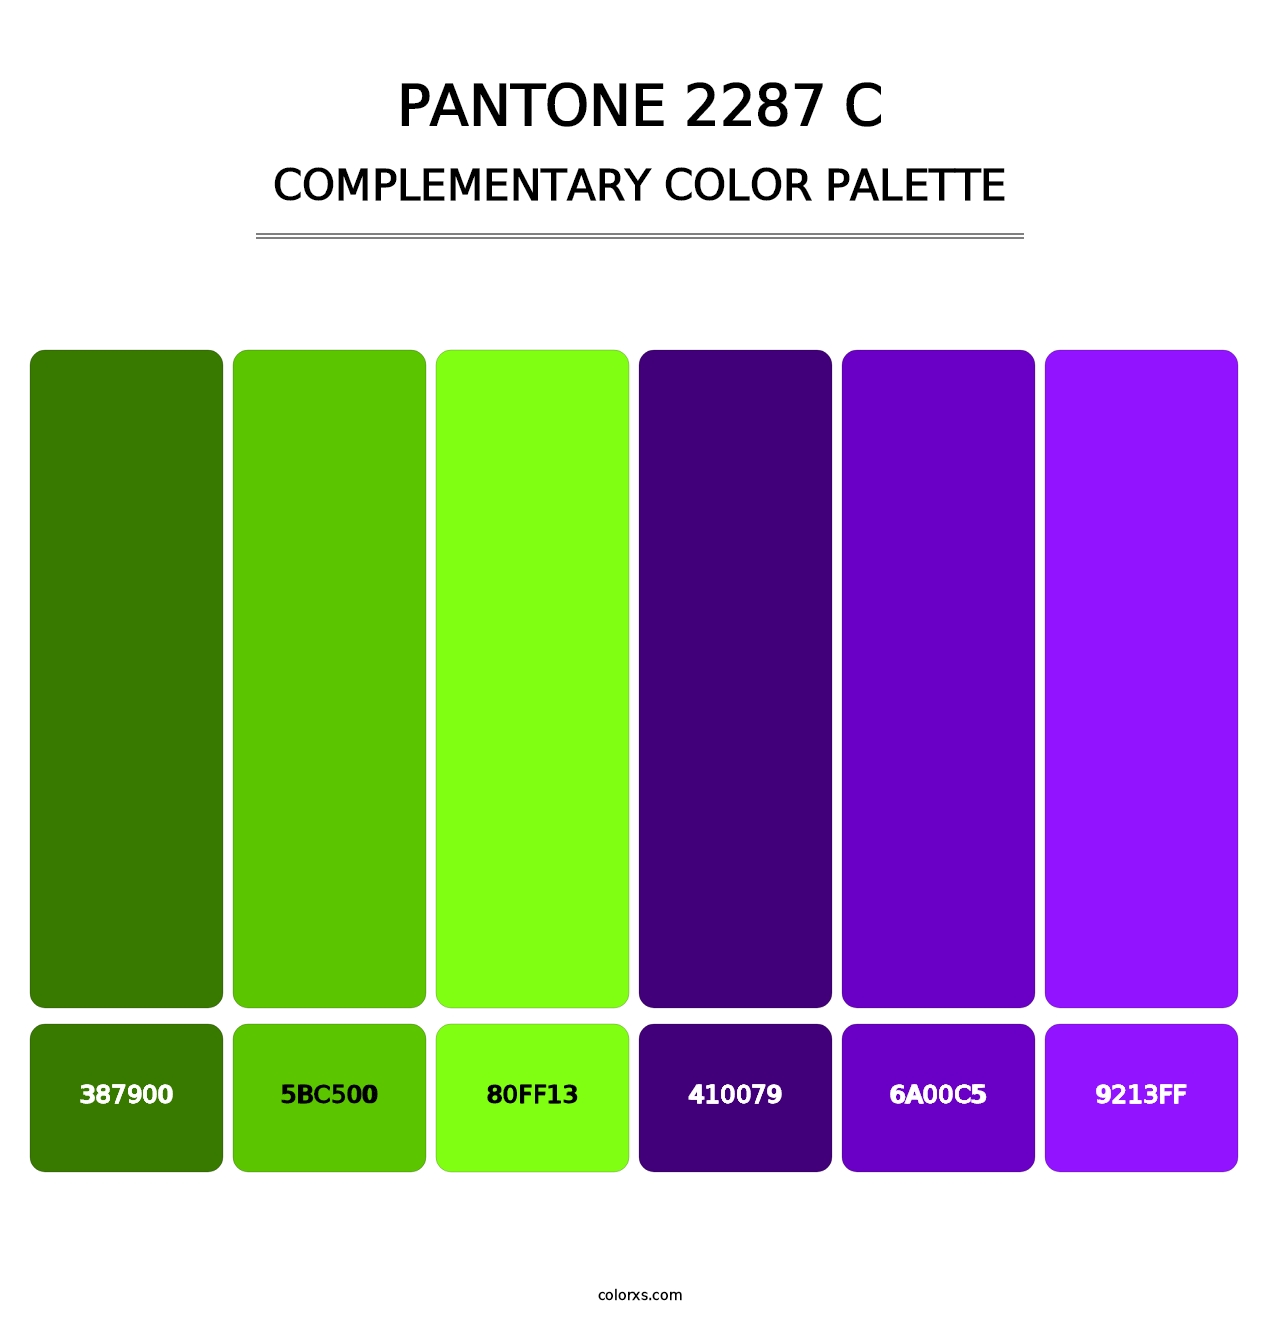 PANTONE 2287 C - Complementary Color Palette